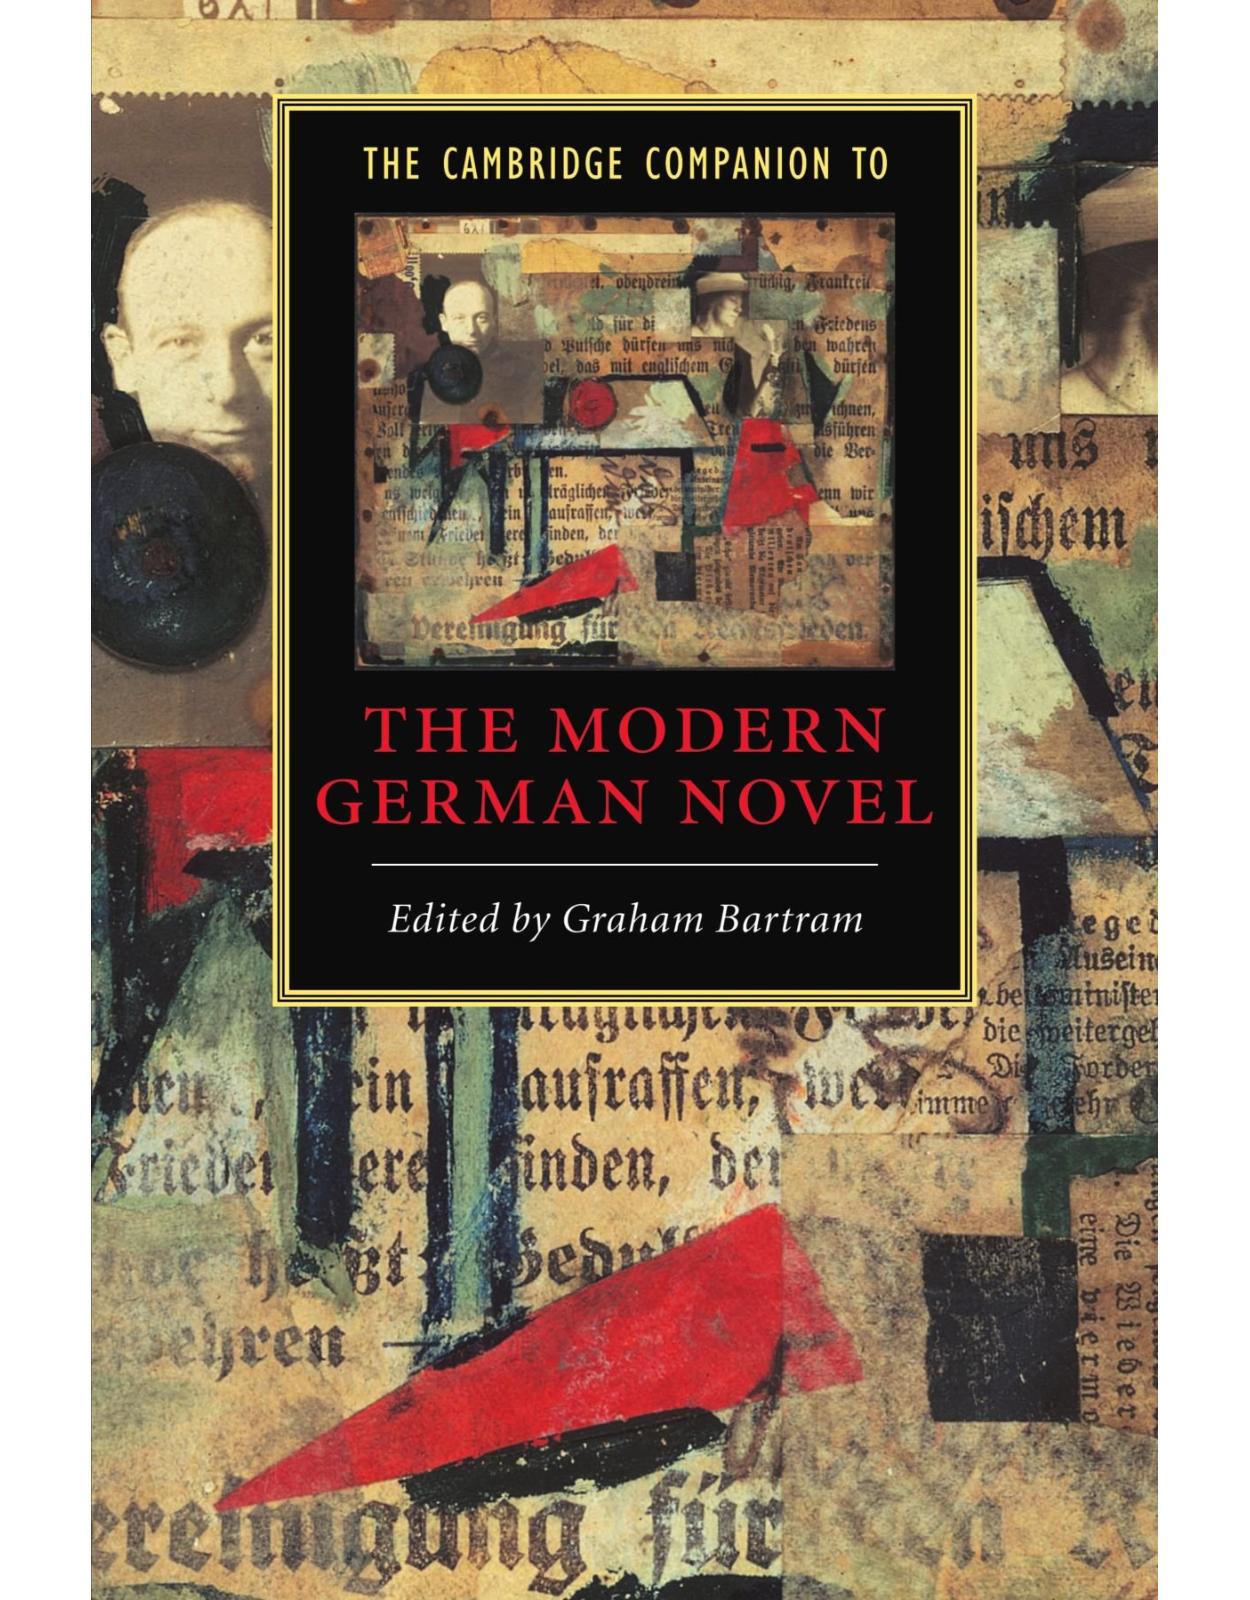 The Cambridge Companion to the Modern German Novel (Cambridge Companions to Literature)